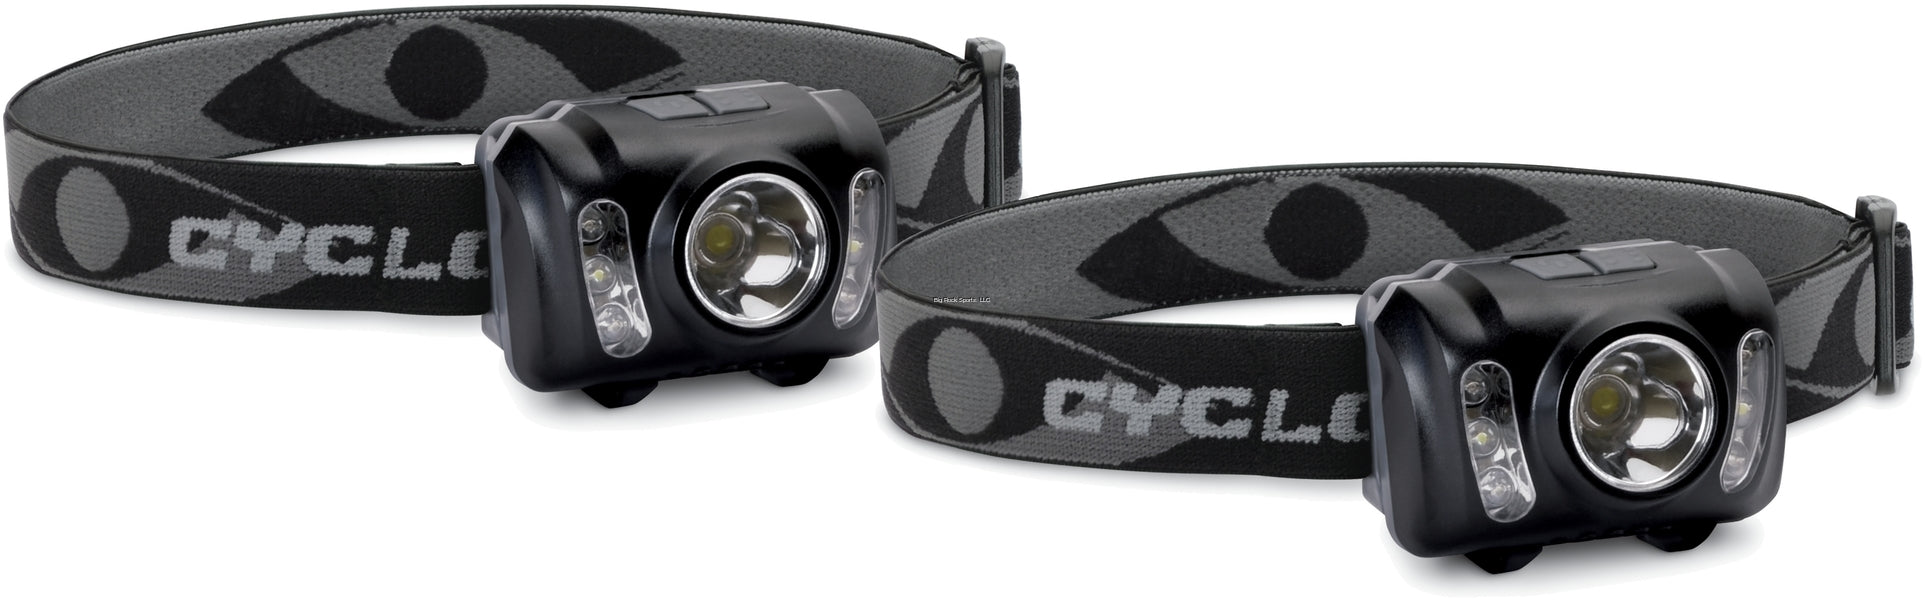 Cyclops 210 Adjustable stretch Lumen Headlamp 2 PK, Waterproof, Black,8oz